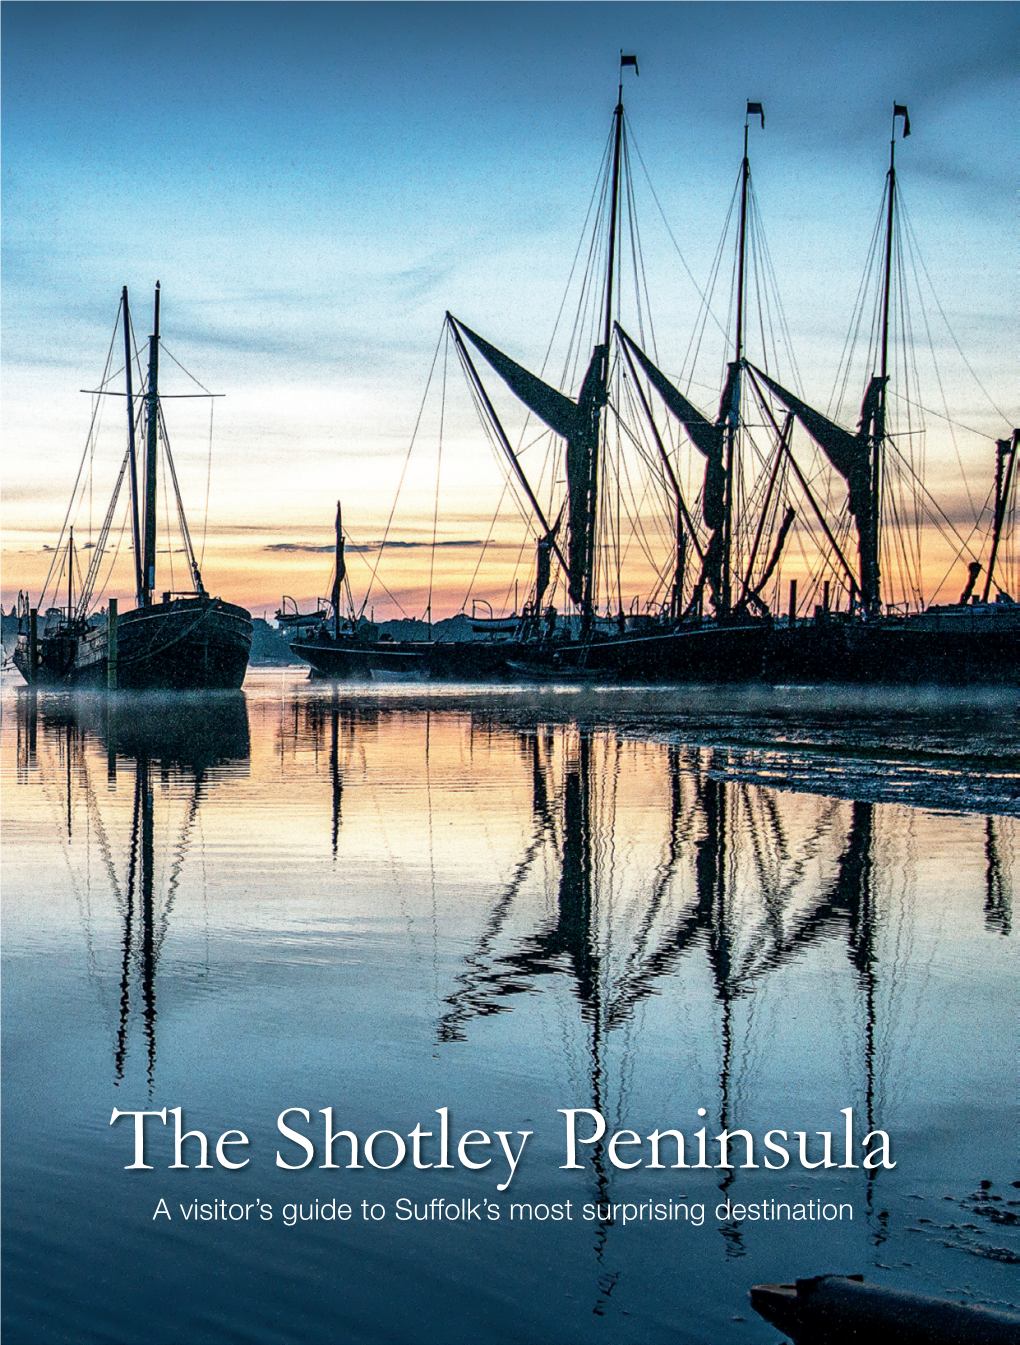 The Shotley Peninsula